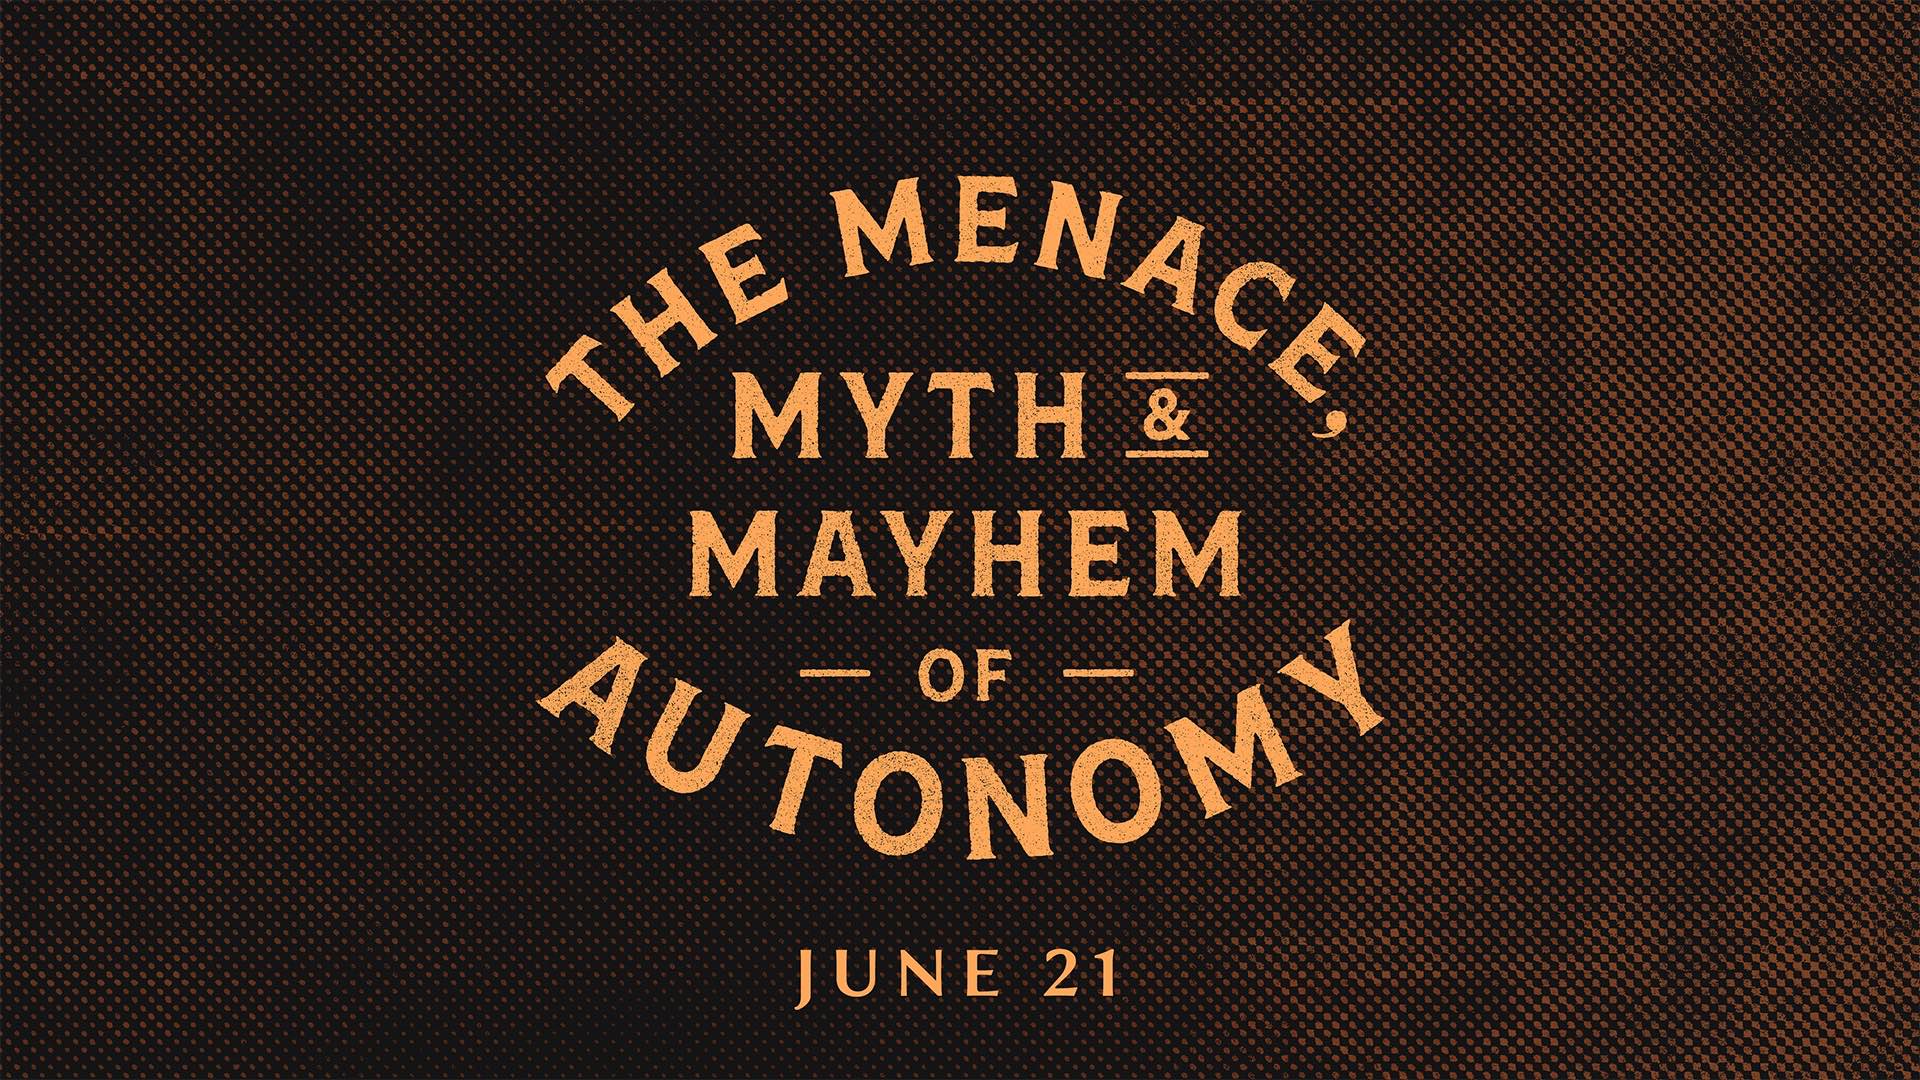 The Menace, Myth & Mayhem of Autonomy